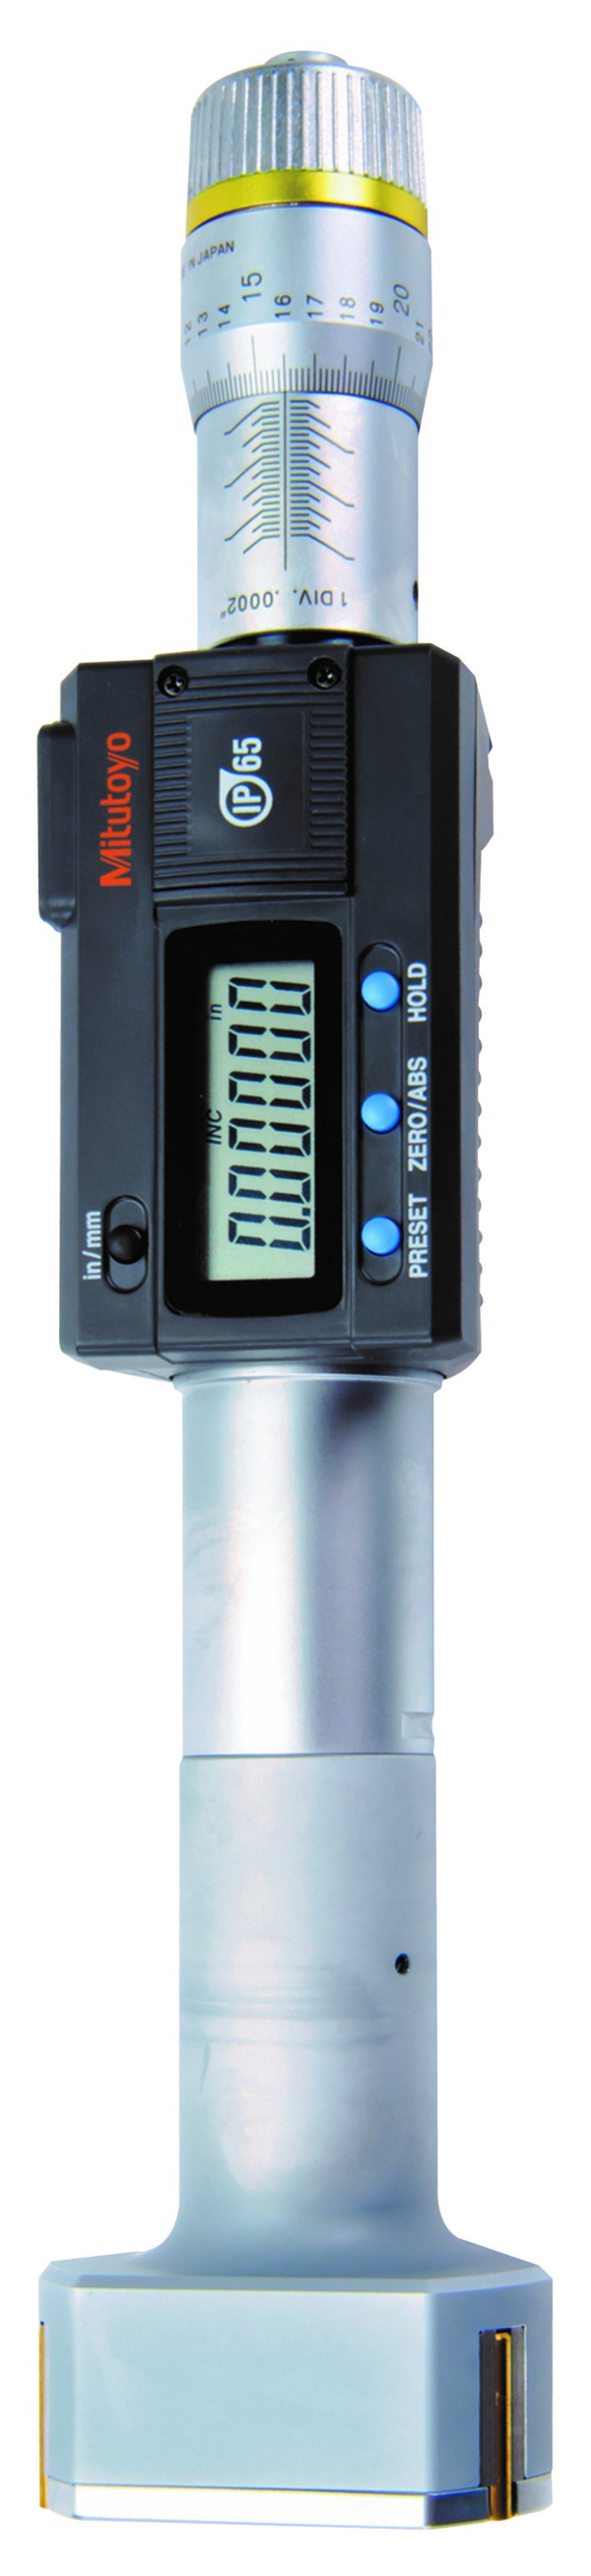 Image of digital 3-point internal micrometer 44594,5", ip65, tin, inch/metric .